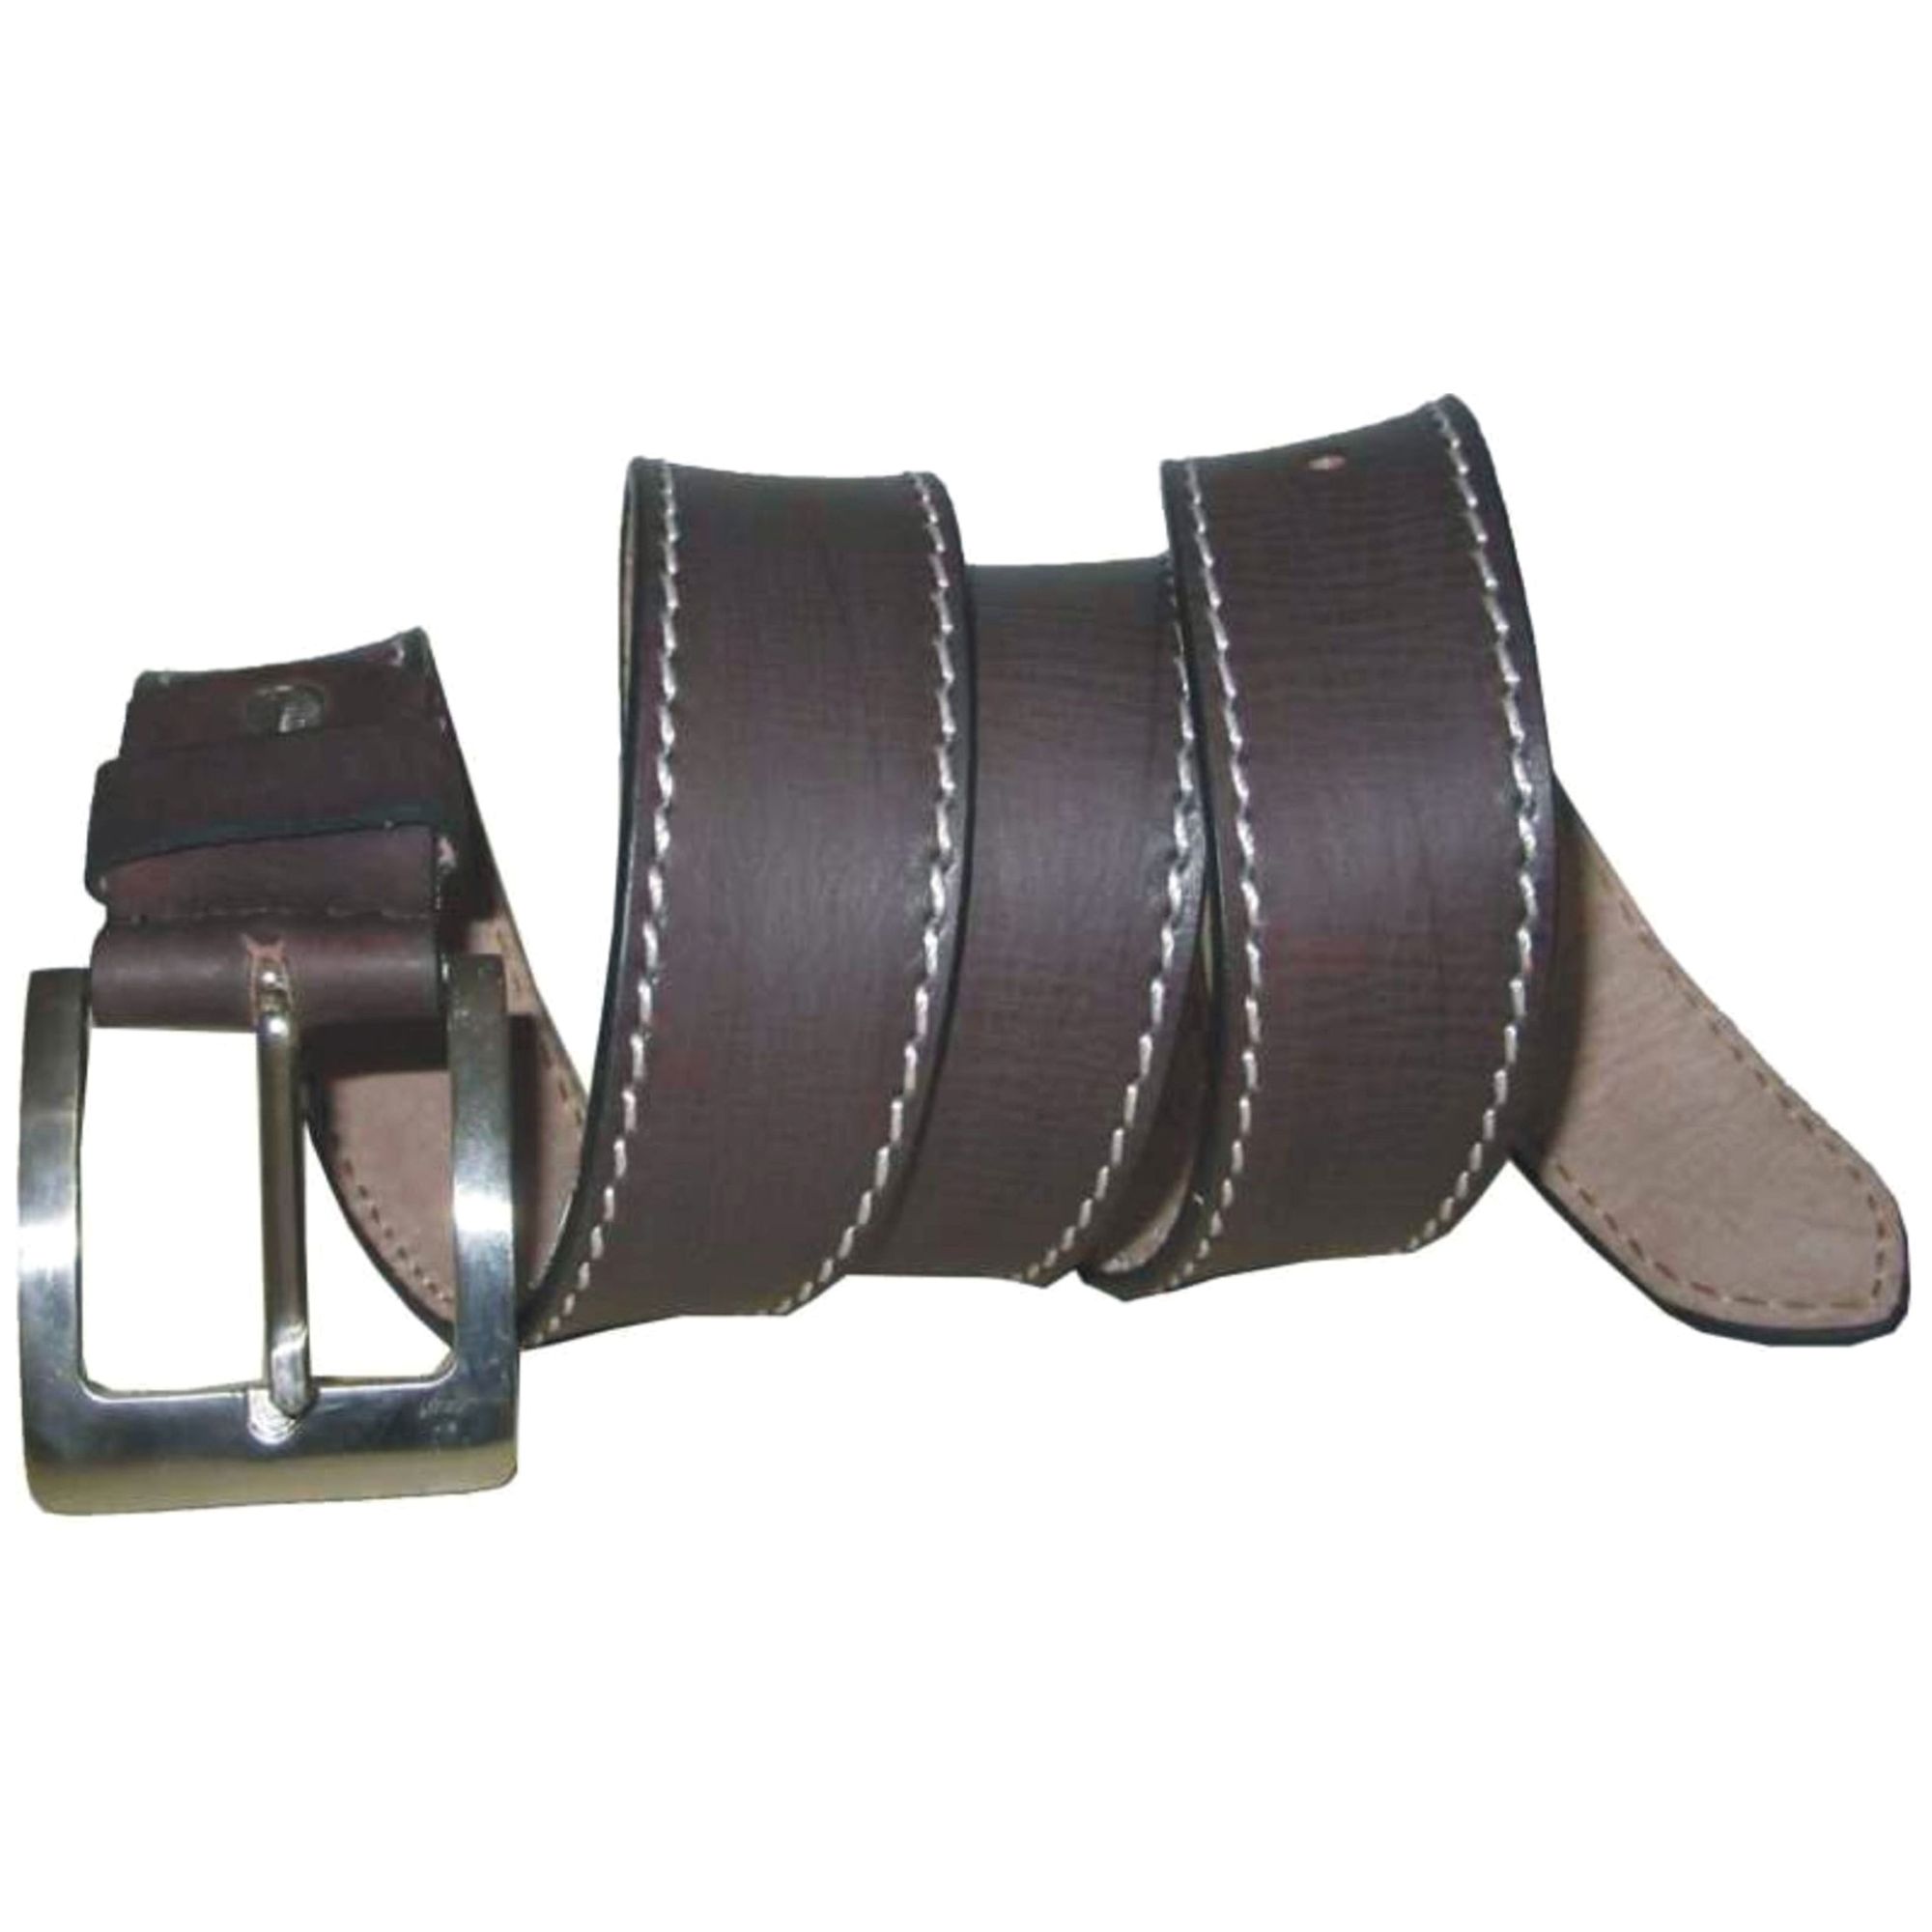 Debonair International Men's Casual Solid Genuine Leather Belt, DI934266, Chocolate Brown